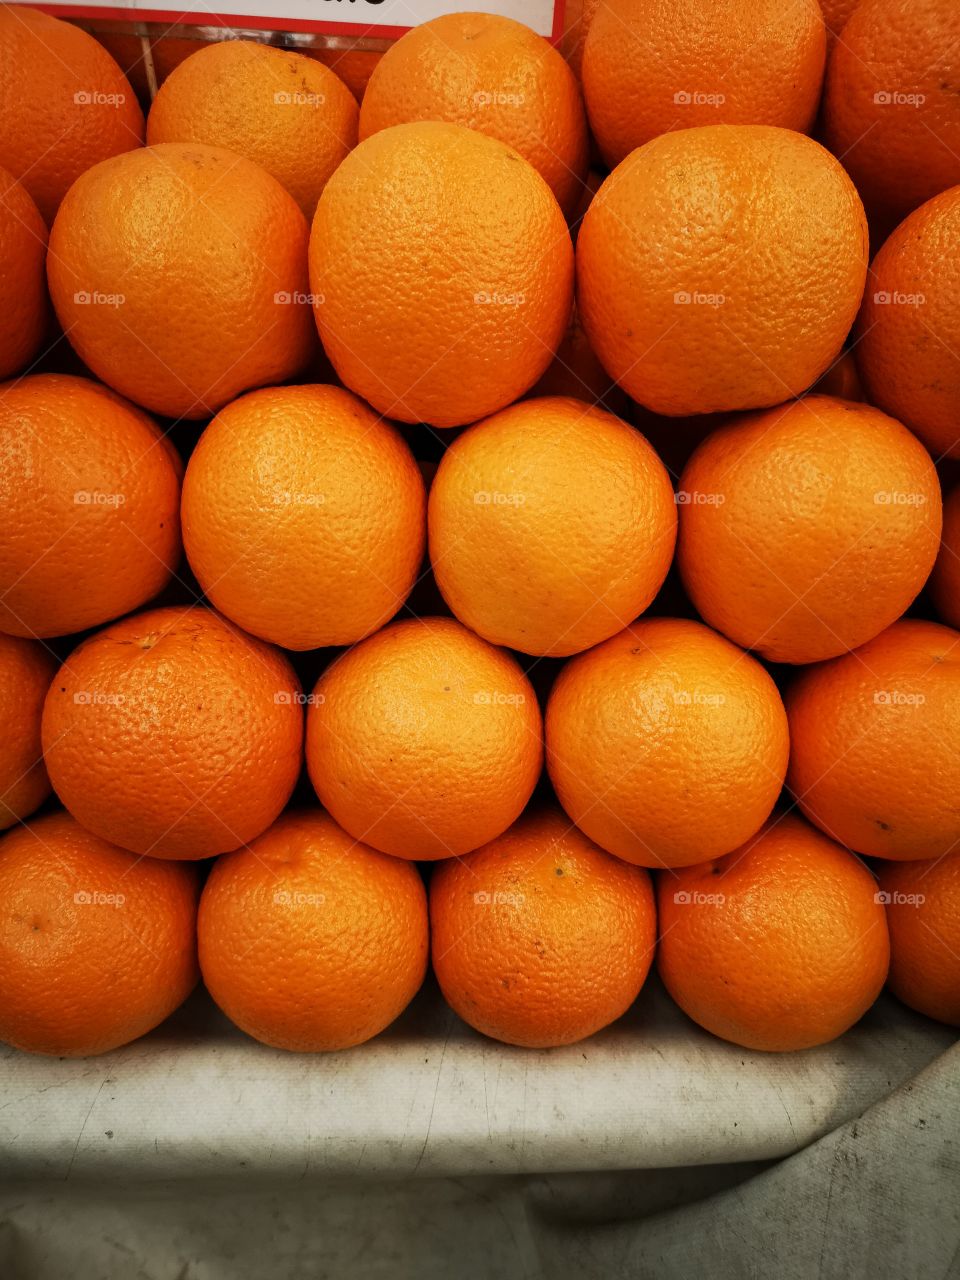 Oranges at Leicester Market.